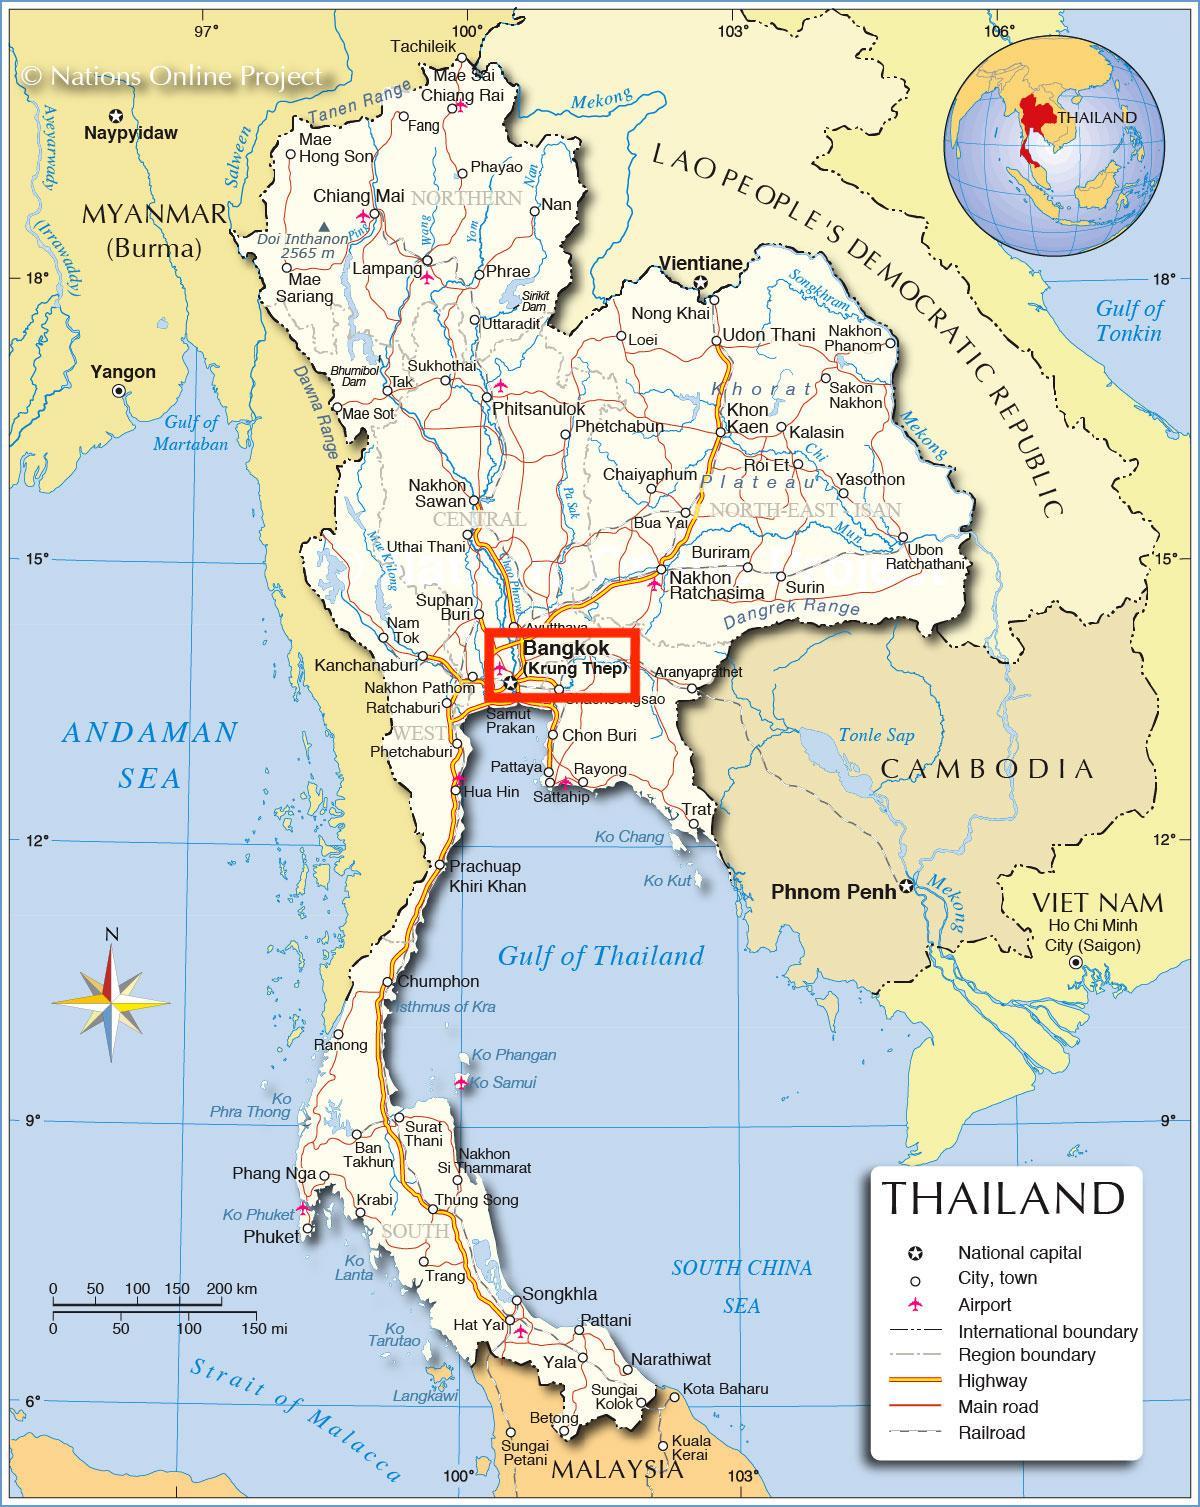 Bangkok (Krung Thep) auf der Thailand-Karte